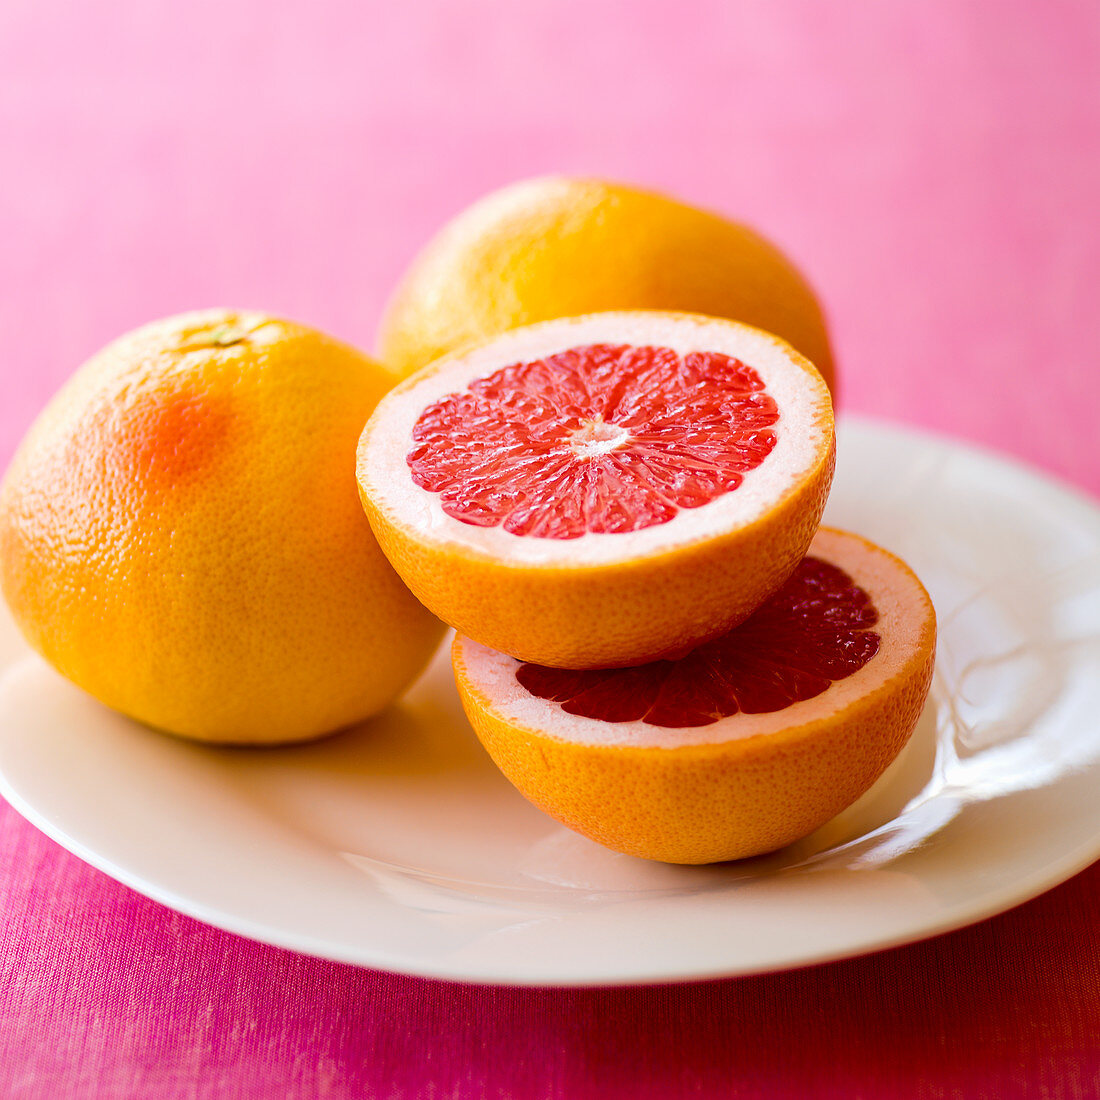 Plate of grapefruits